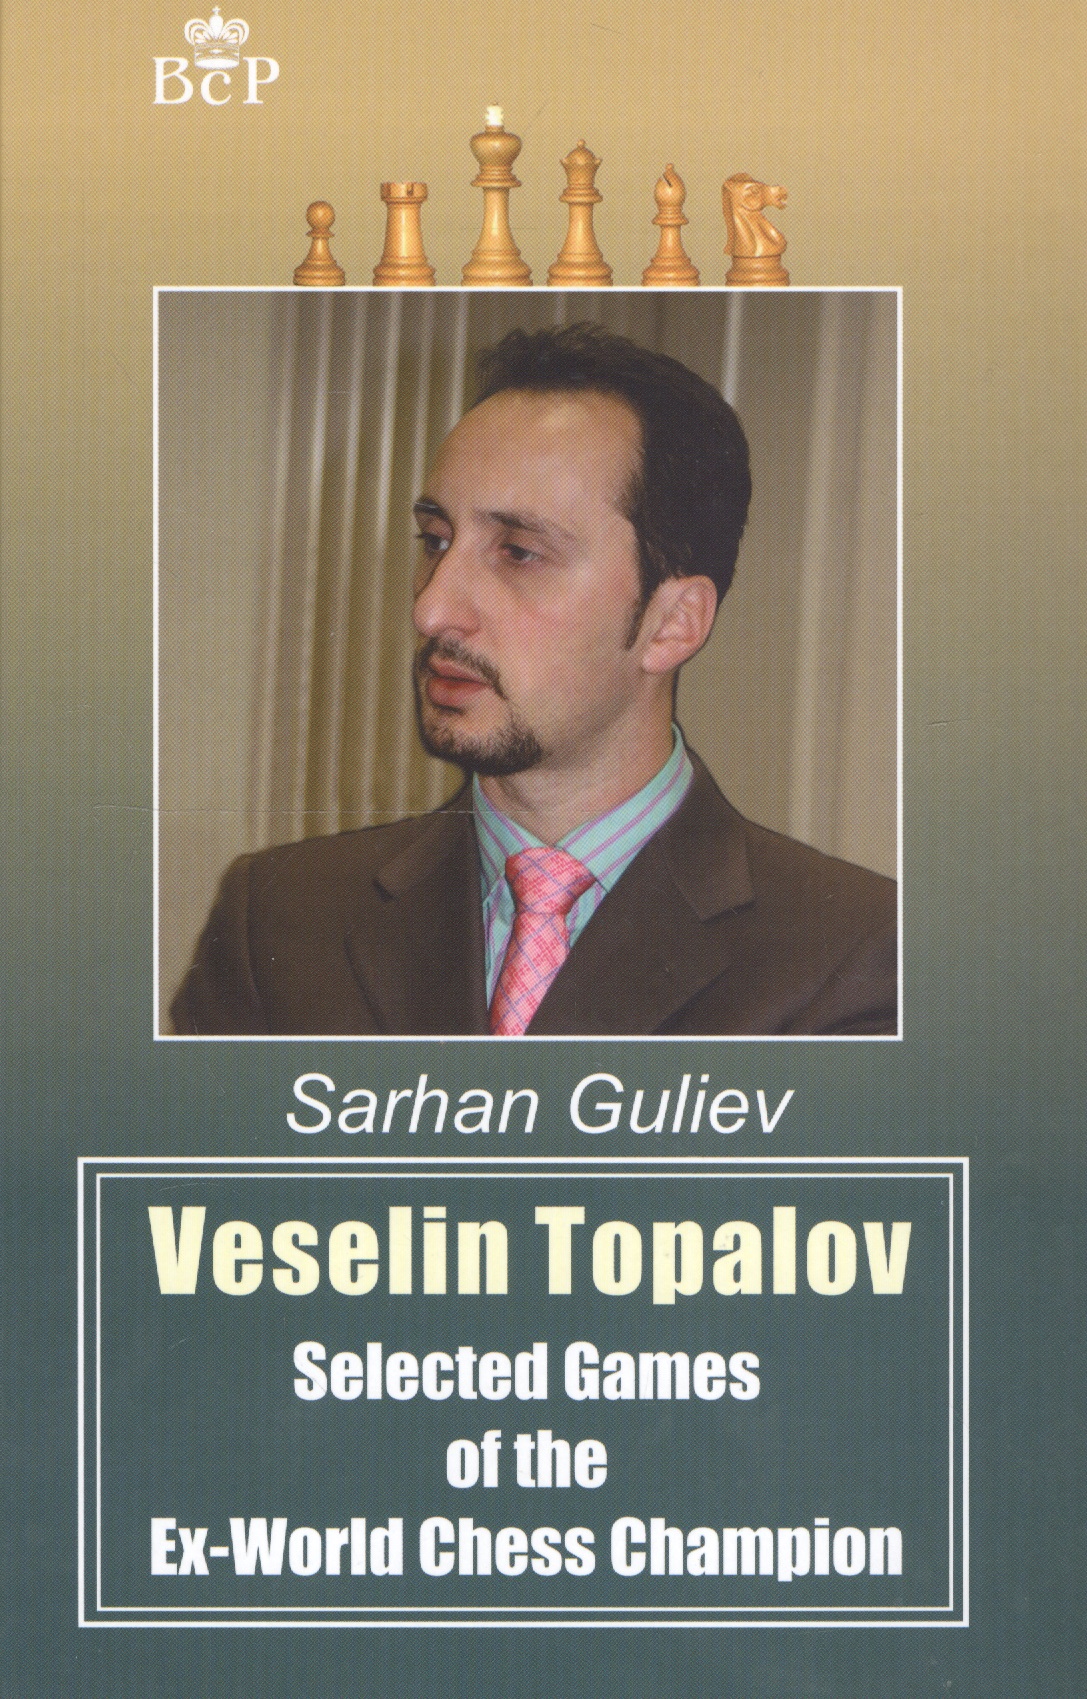 seleznev a 100 chess studies Guliev Sarhan Veselin Topalov. Selected Games of Ex-World Chess Champion